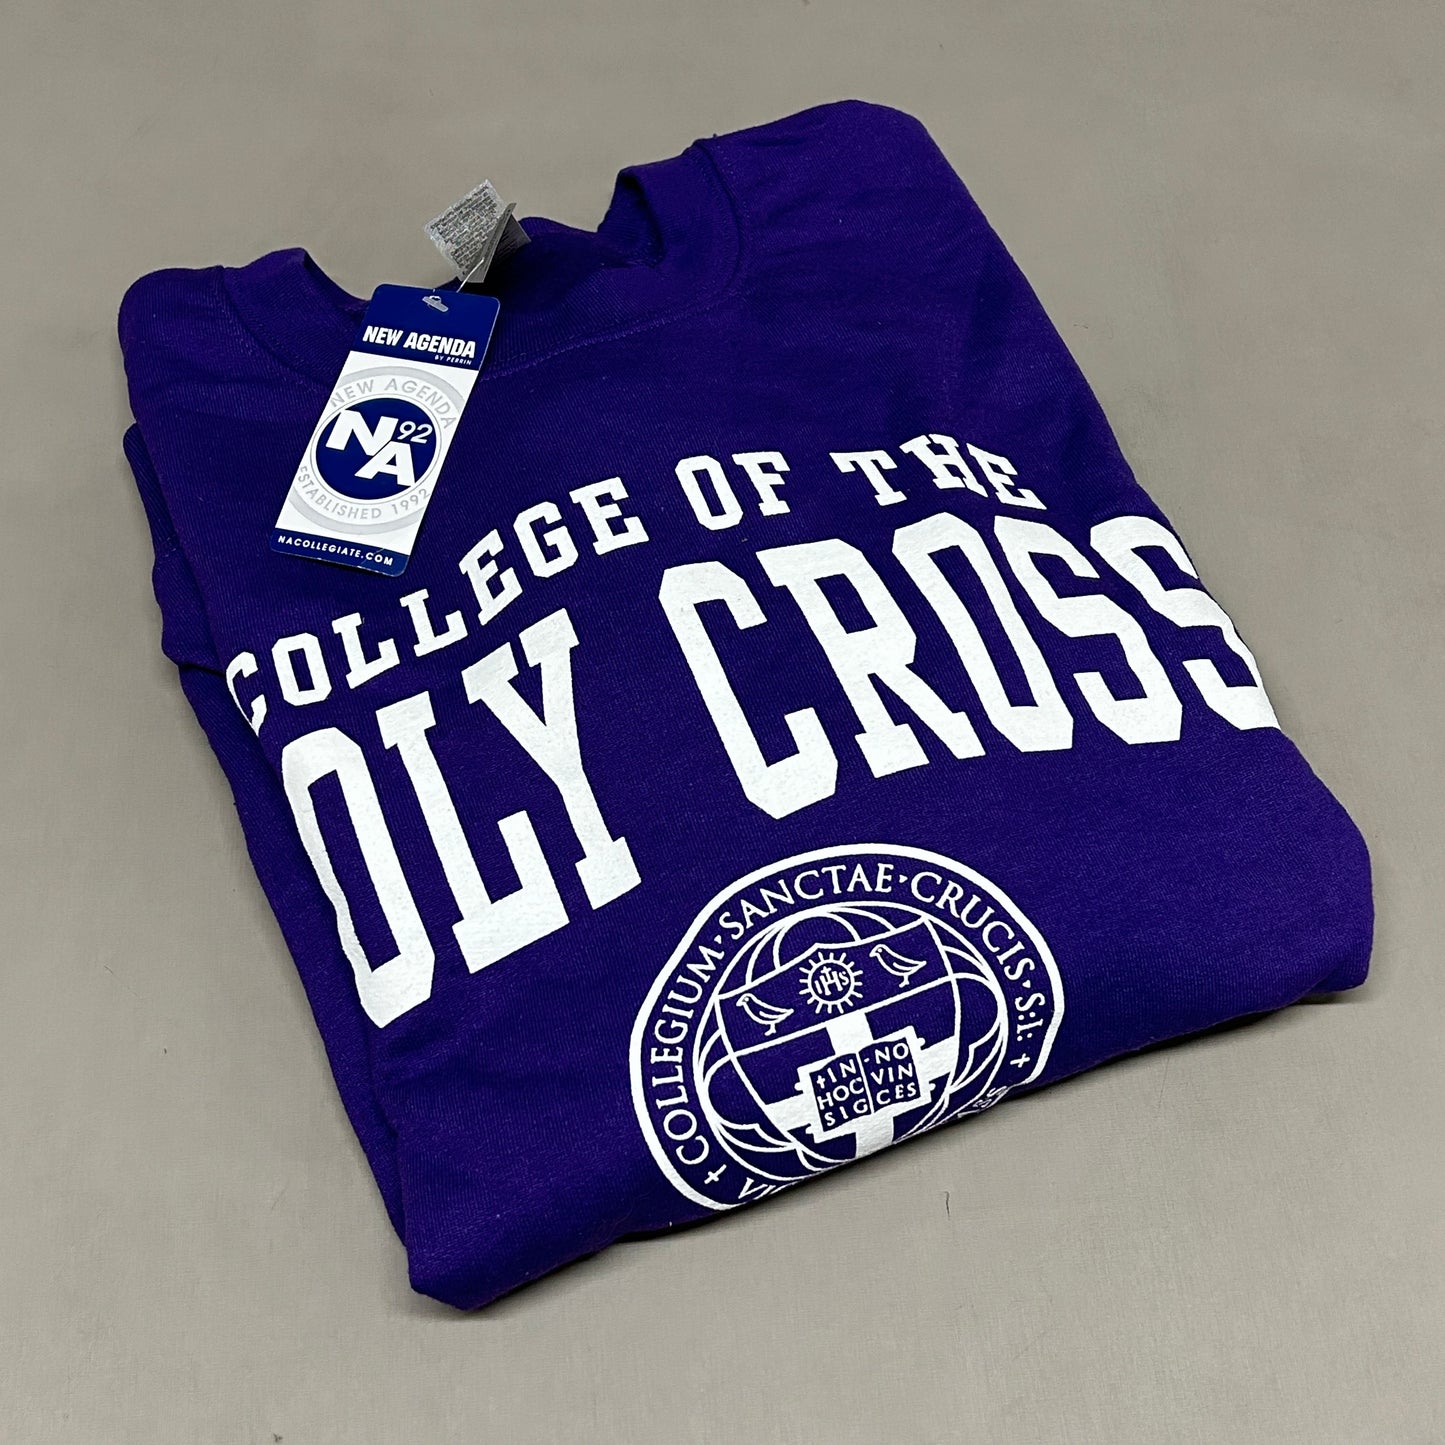 GILDAN College of the Holy Cross Heritage Heavy Cotton Crewneck Sz M Purple (New)